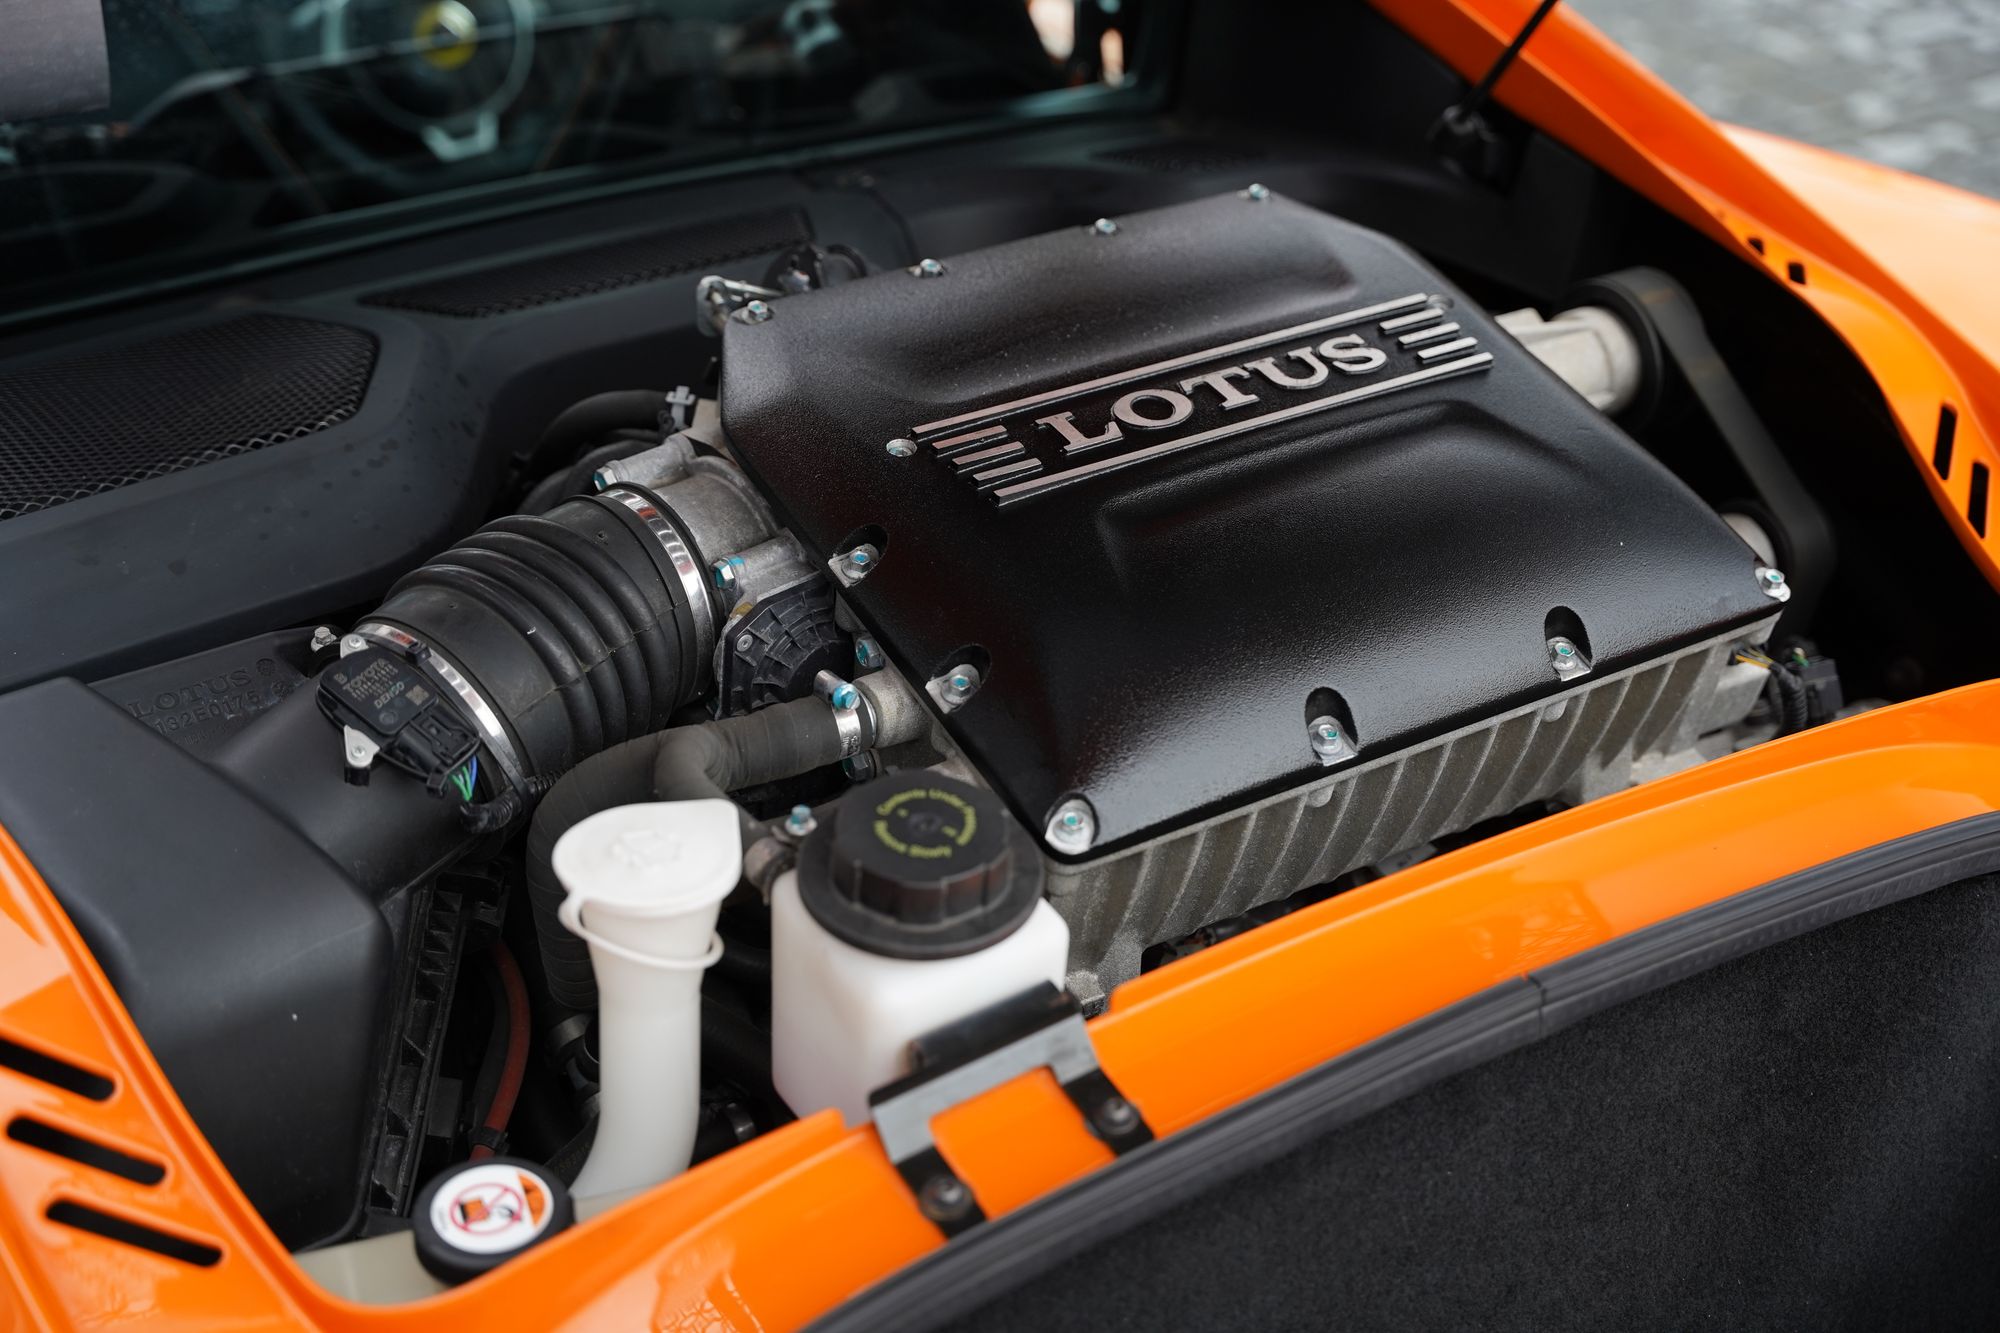 2021 Lotus Exige Sport 390 'Final Edition' Press Car